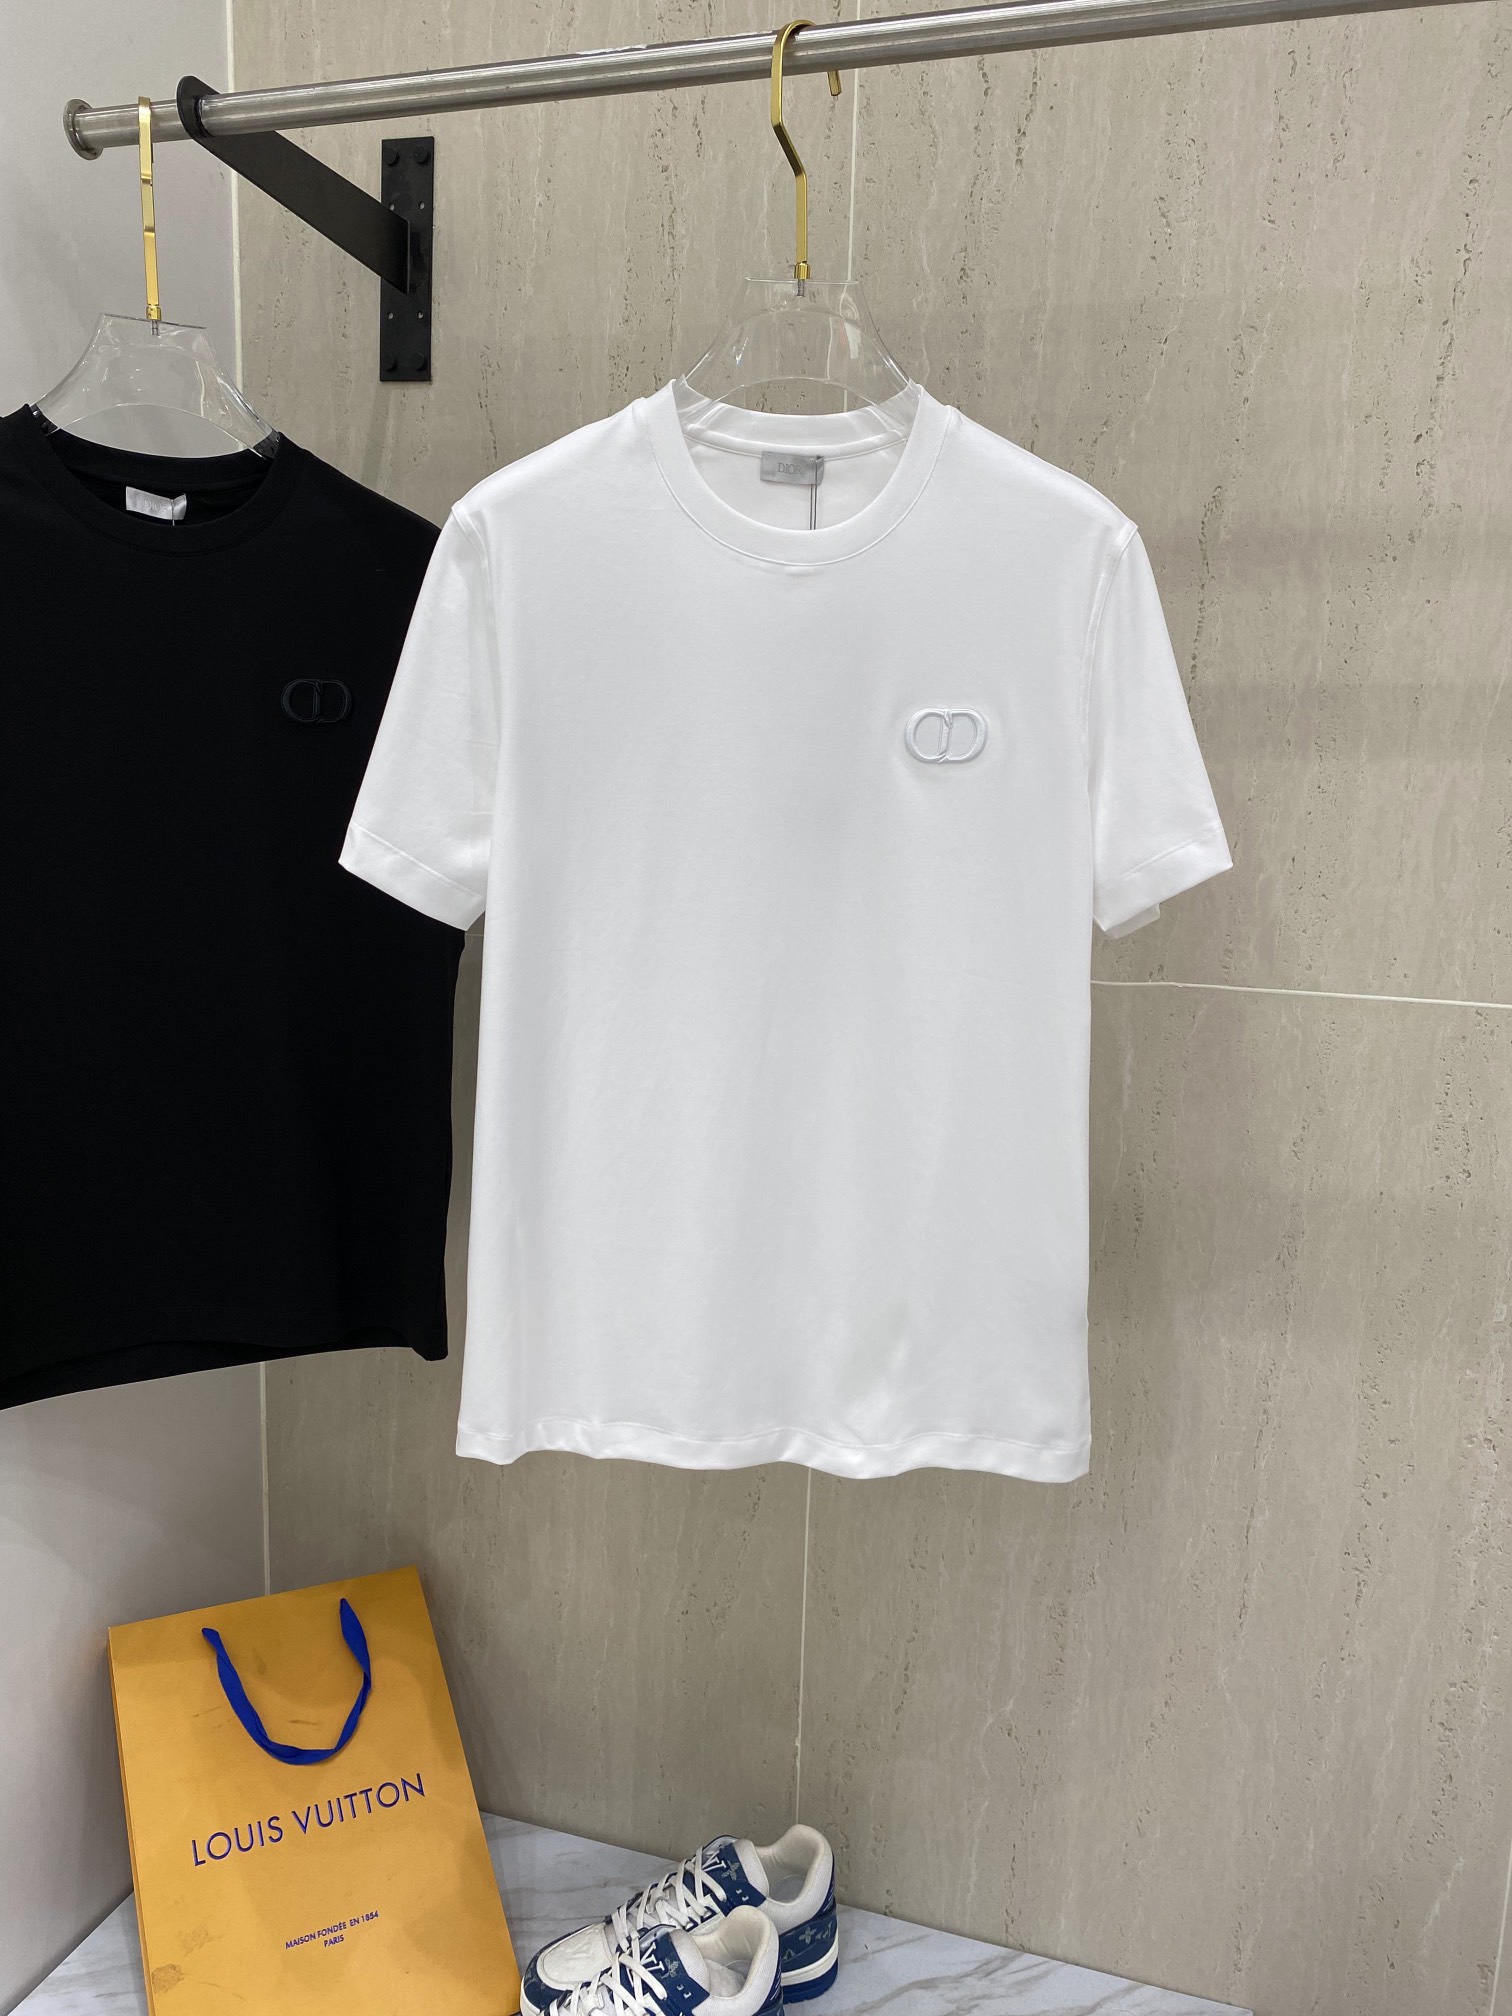 Dior Clothing T-Shirt Unisex Cotton Short Sleeve